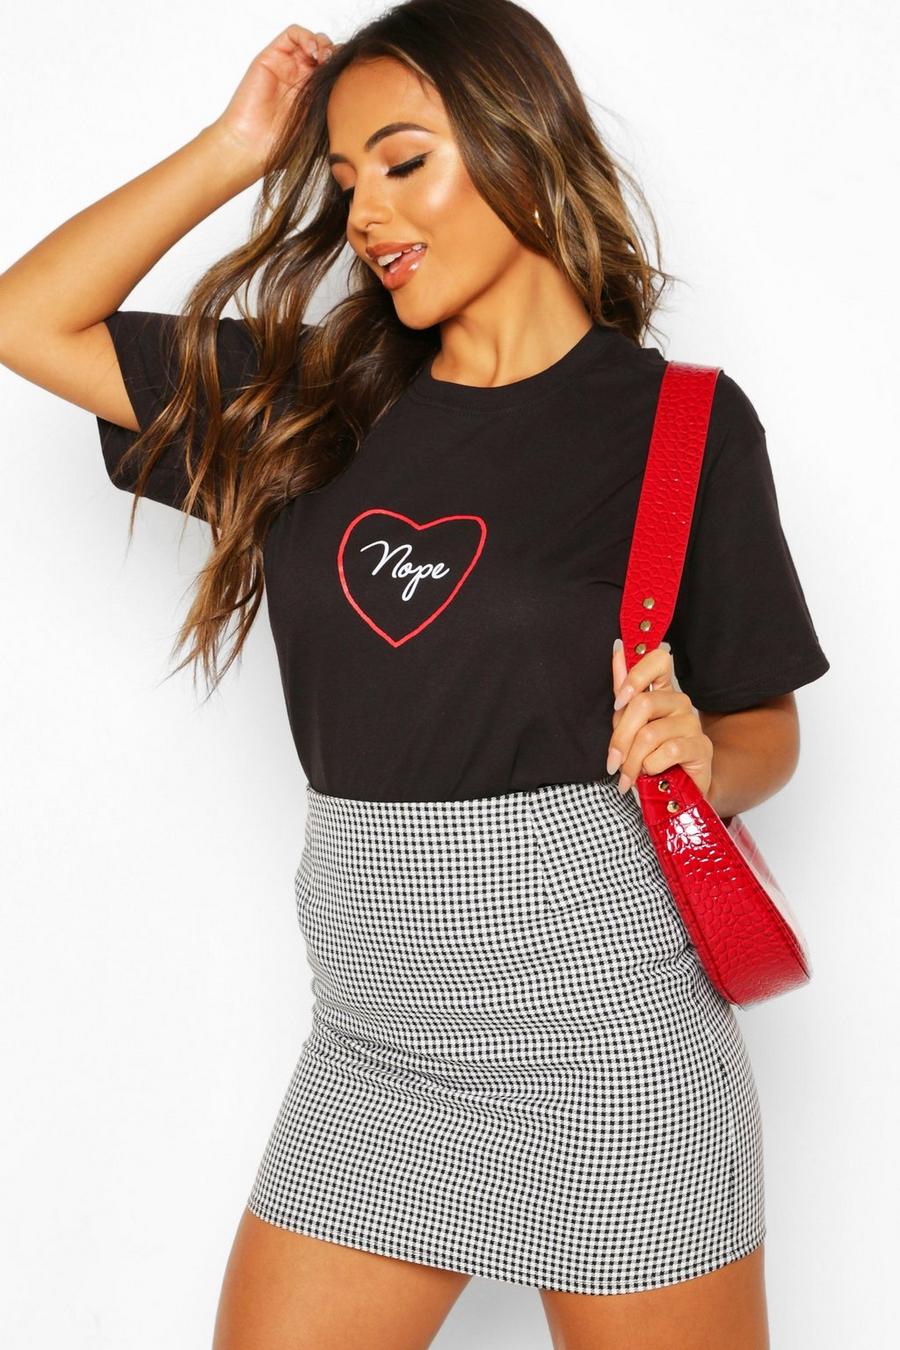 Petite Valentine 'Nope' Heart Graphic T-Shirt image number 1